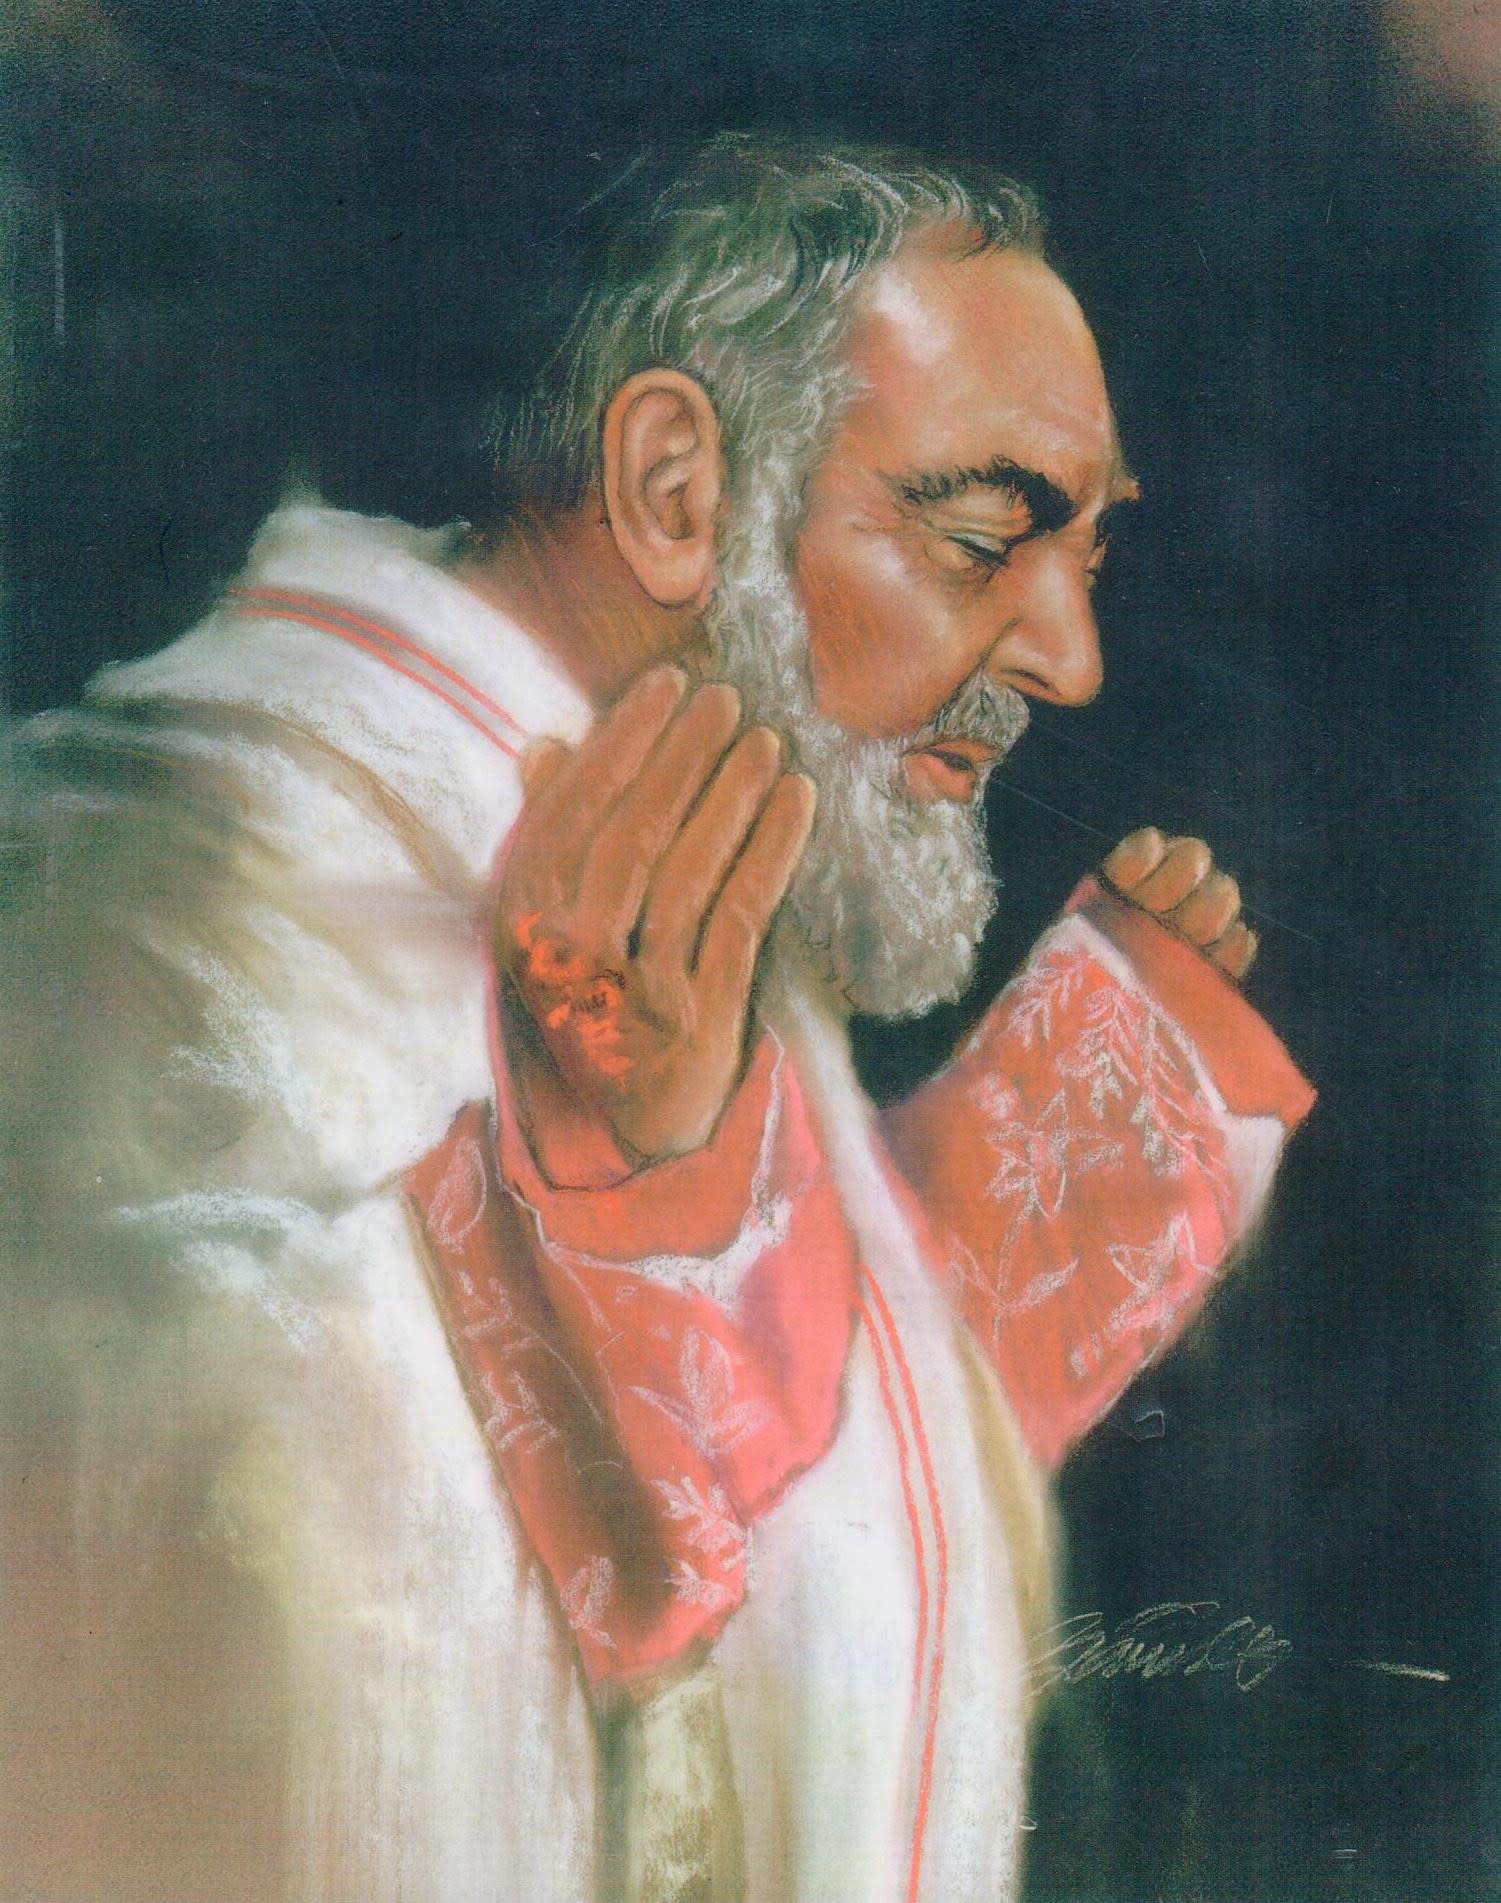 Padre Pio (w/ stigmata)